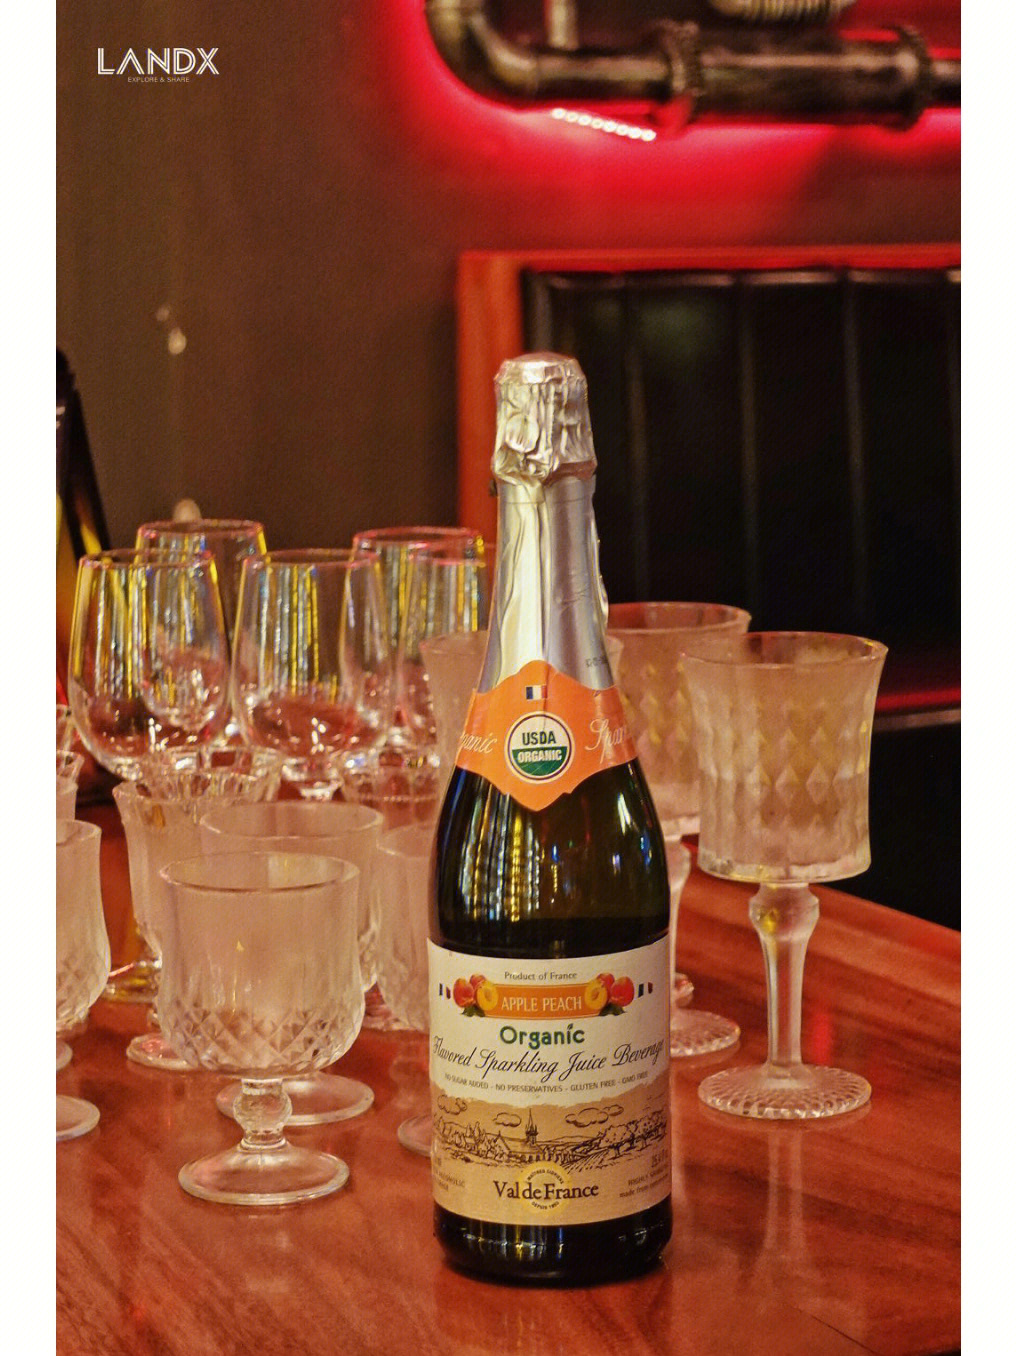 from landx西丽门店的香槟庆祝仪式感你们接收到了吗?